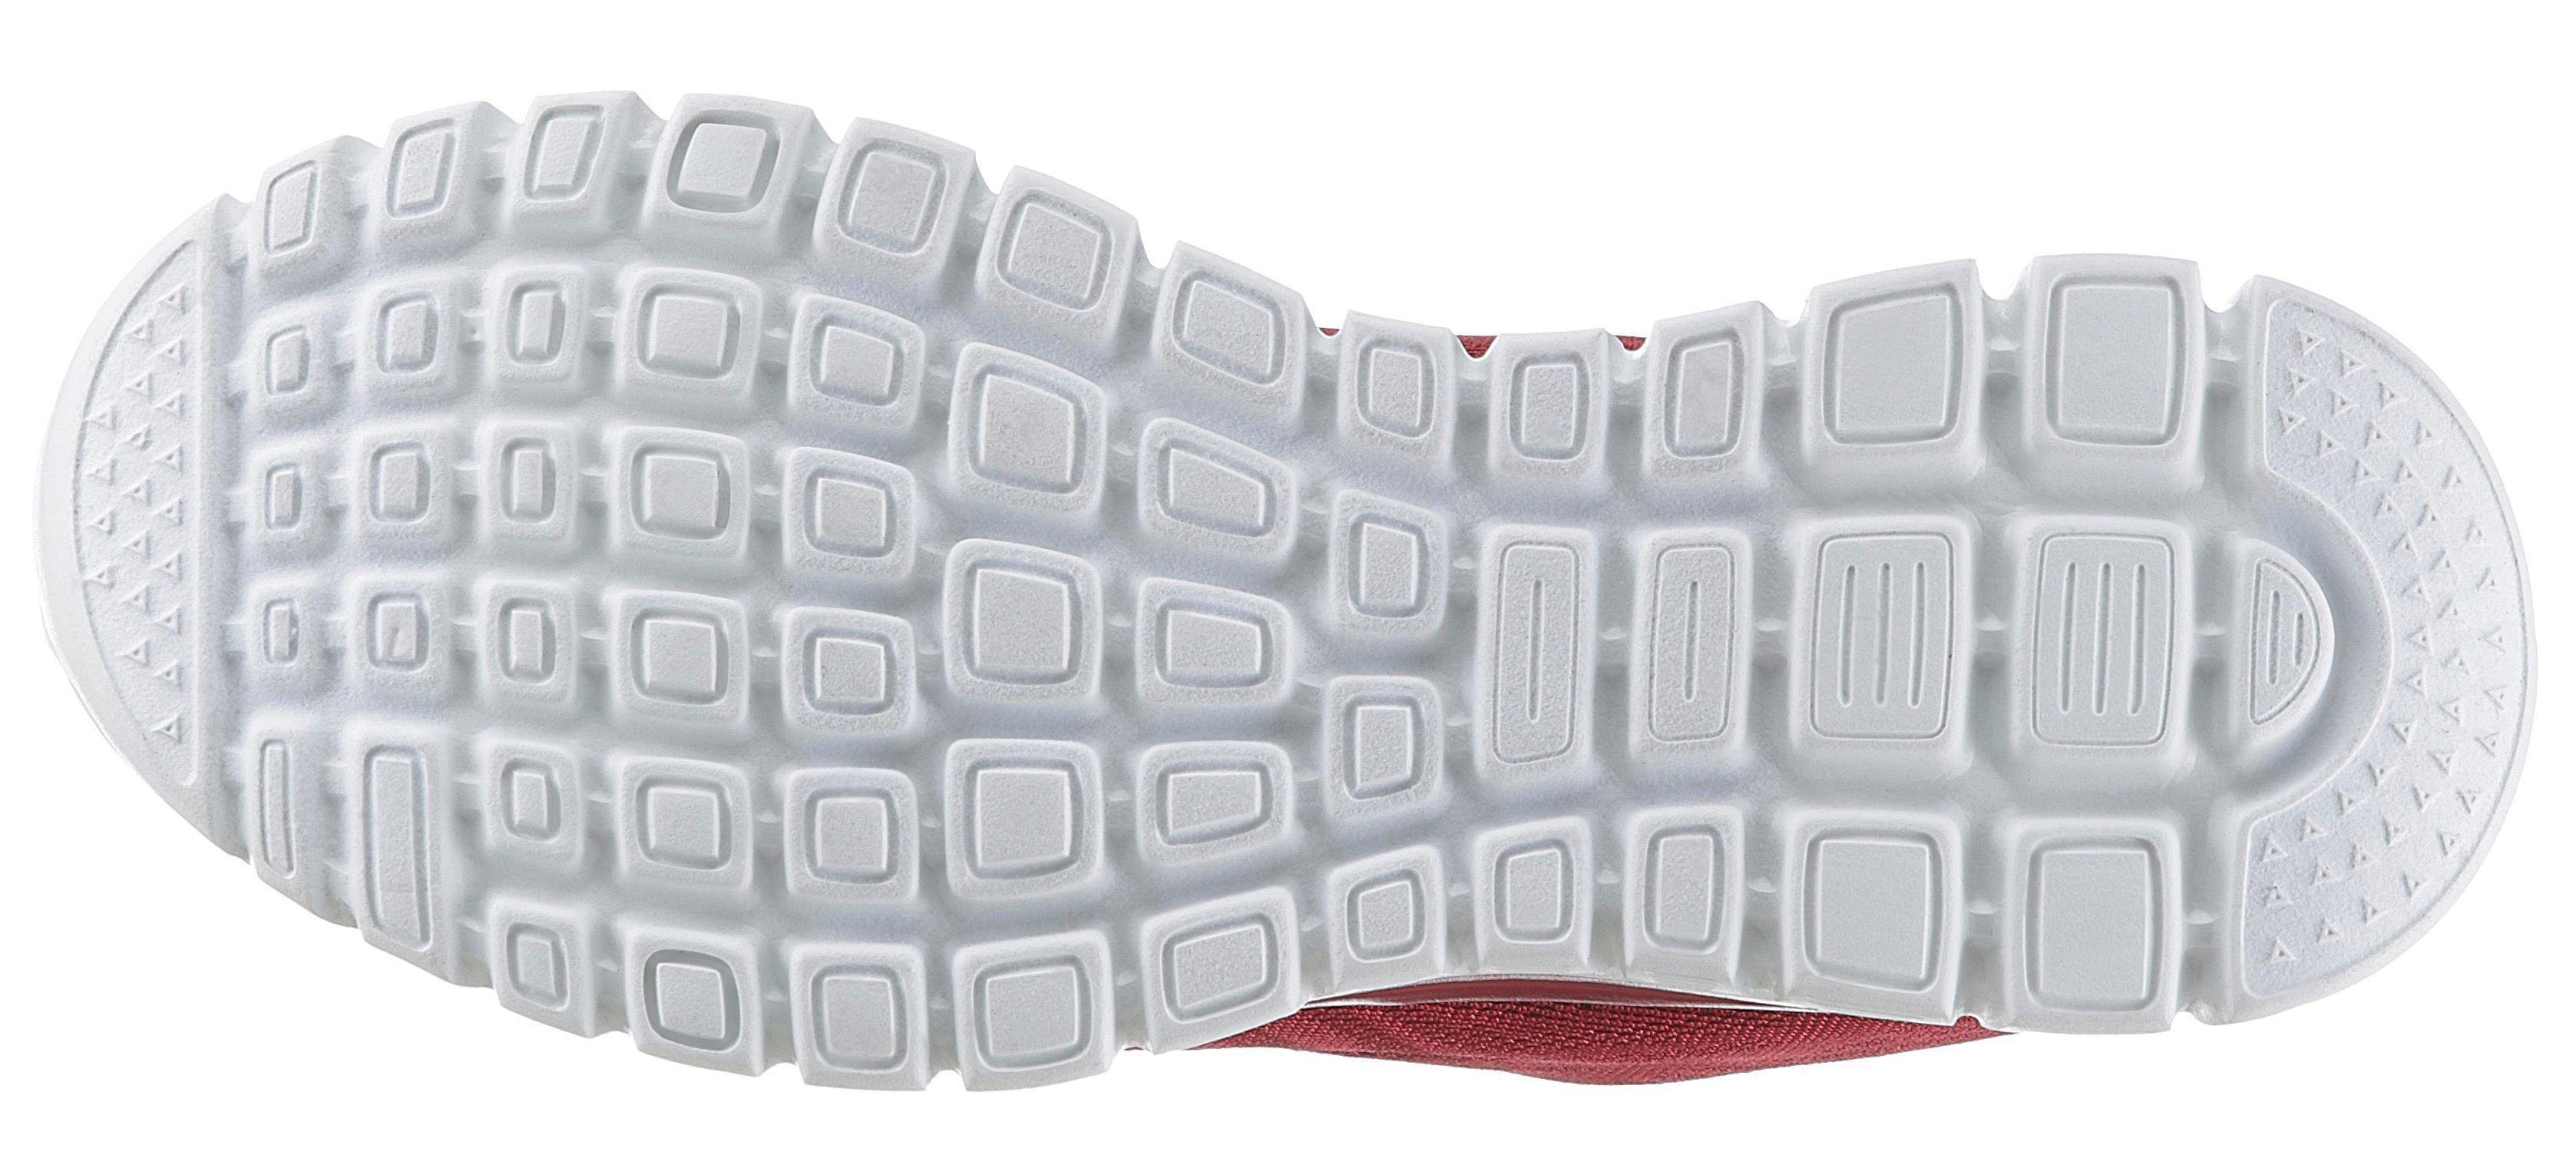 Get Connected rot Graceful - mit durch Sneaker Foam Dämpfung Memory Skechers